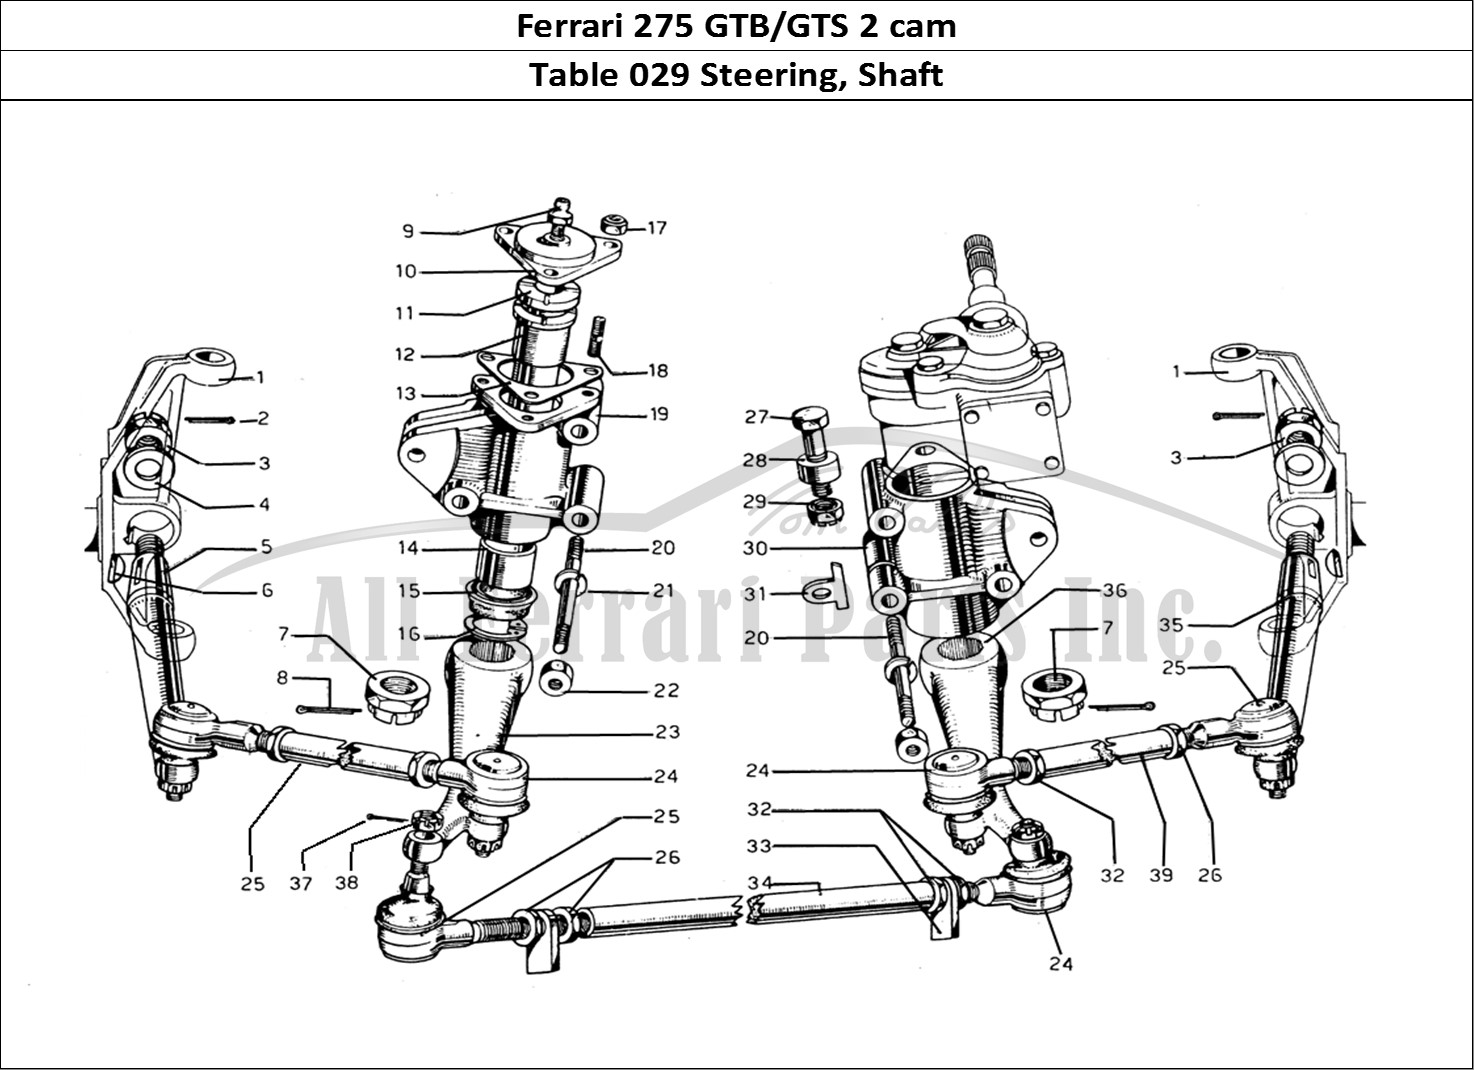 Ferrari Parts Ferrari 275 GTB/GTS 2 cam Page 029 Steering & Shaft